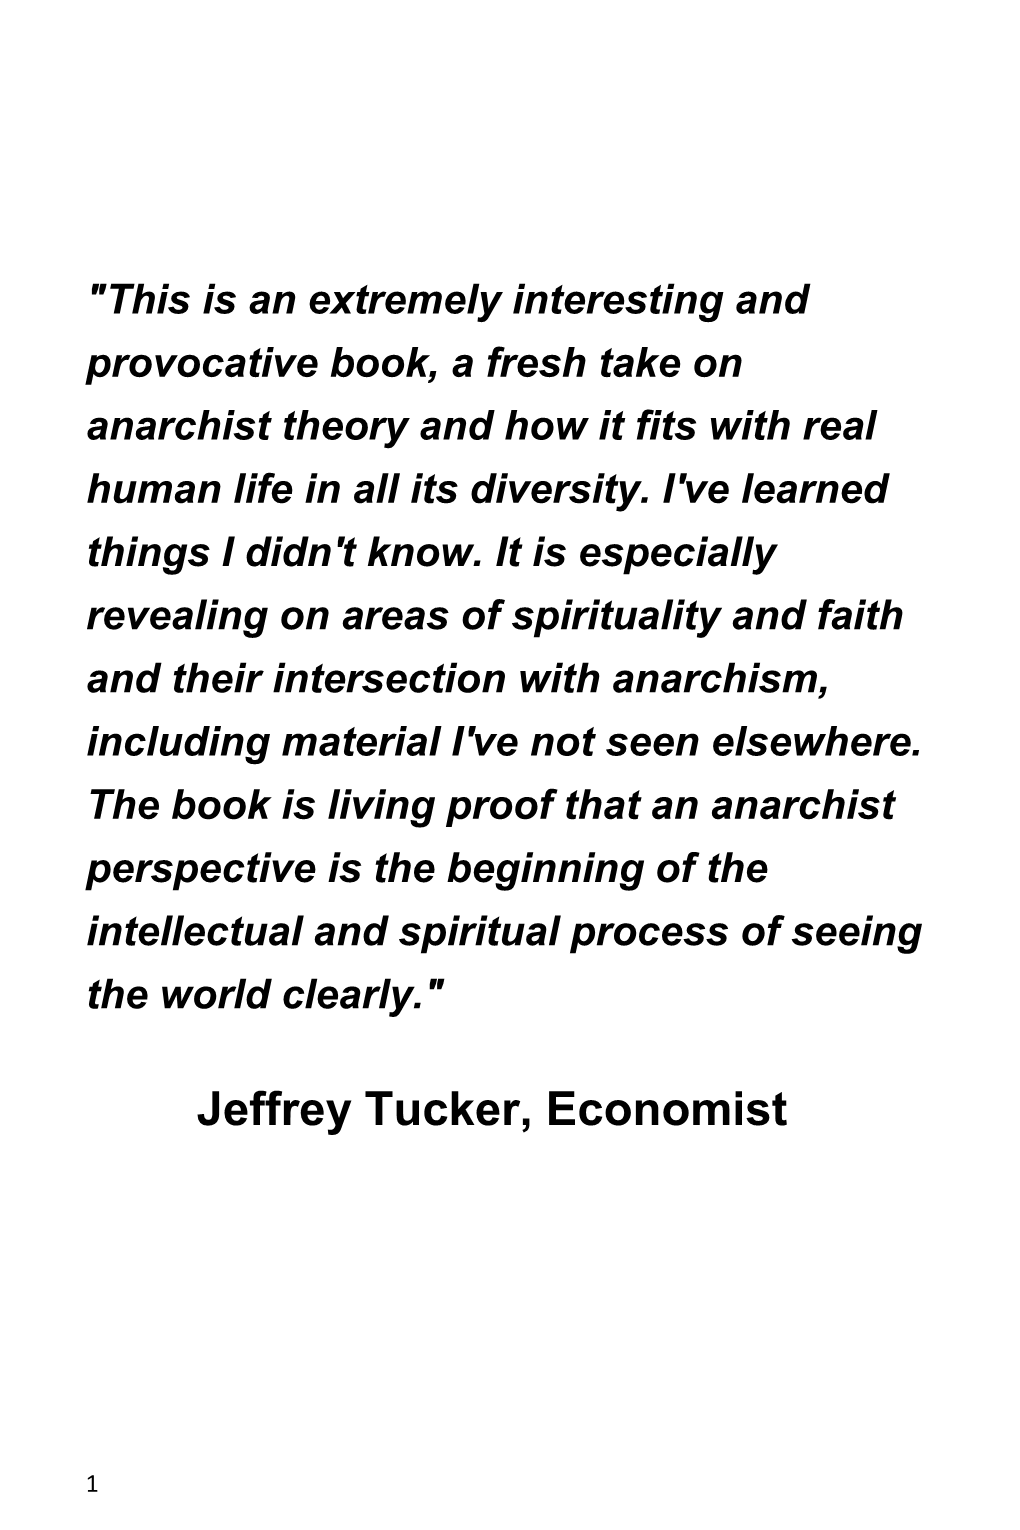 Reflections on Anarchy & Spirituality